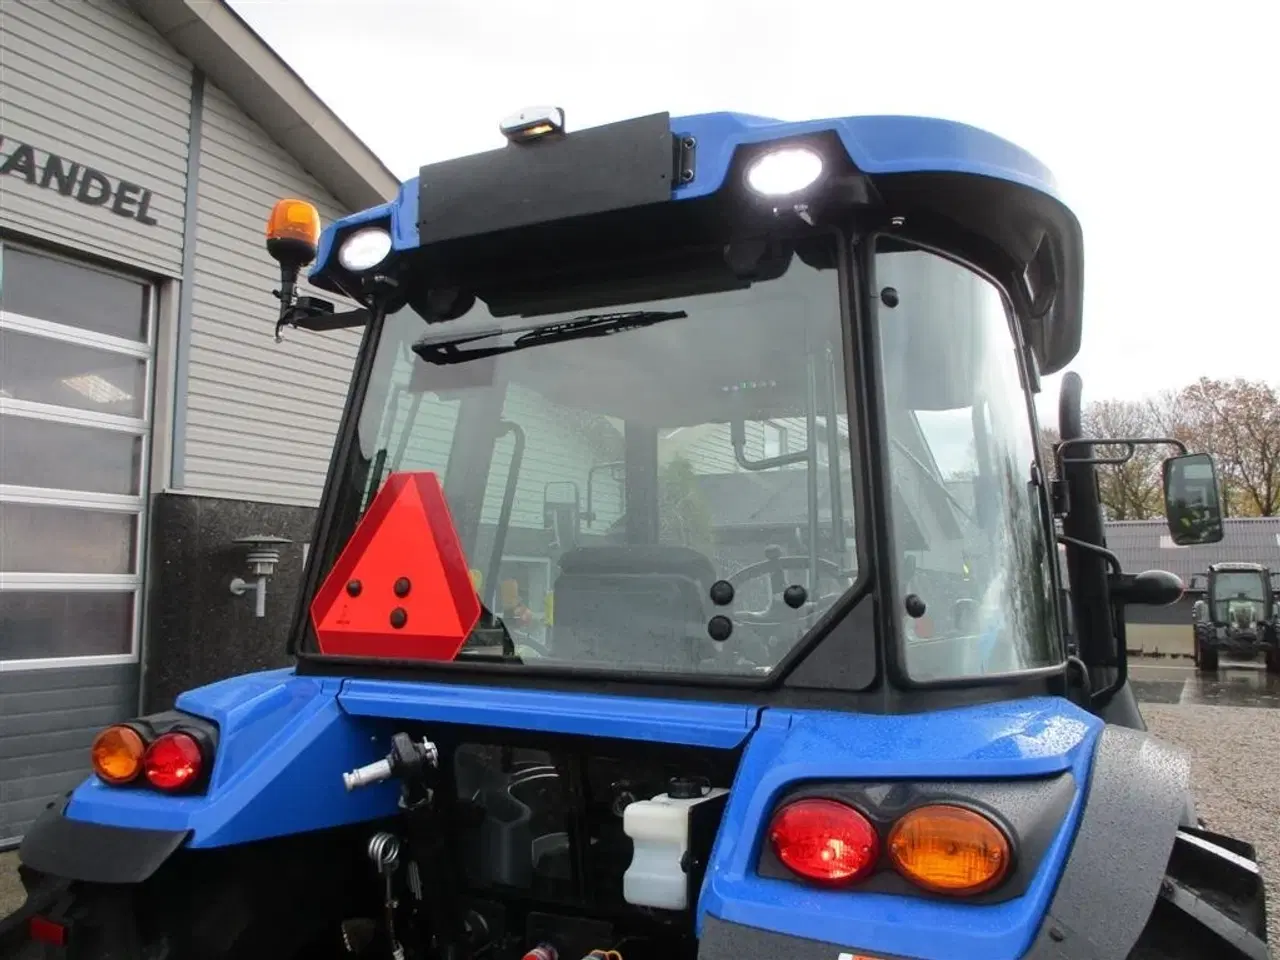 Billede 22 - Solis 90 Fabriksny traktor med 2 års garanti, lukket kabine med klima anlæg, og krybegear samt vendegear.